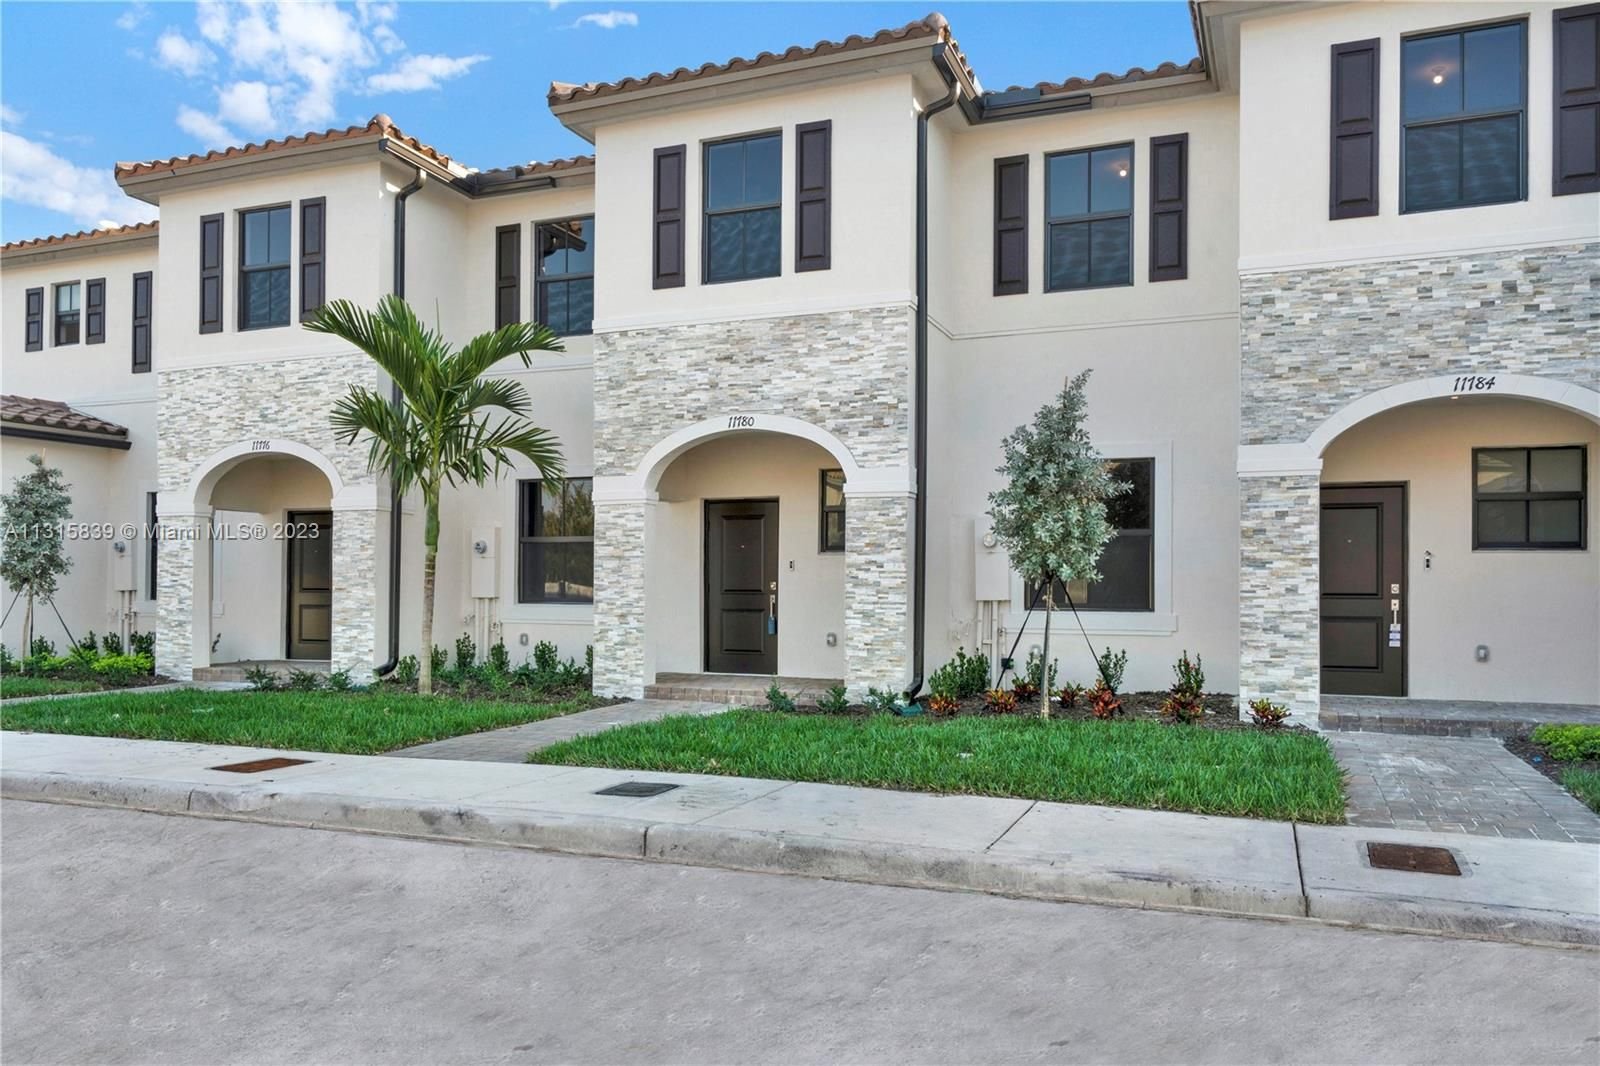 Real estate property located at 11780 247th Ter #0, Miami-Dade County, Miami, FL